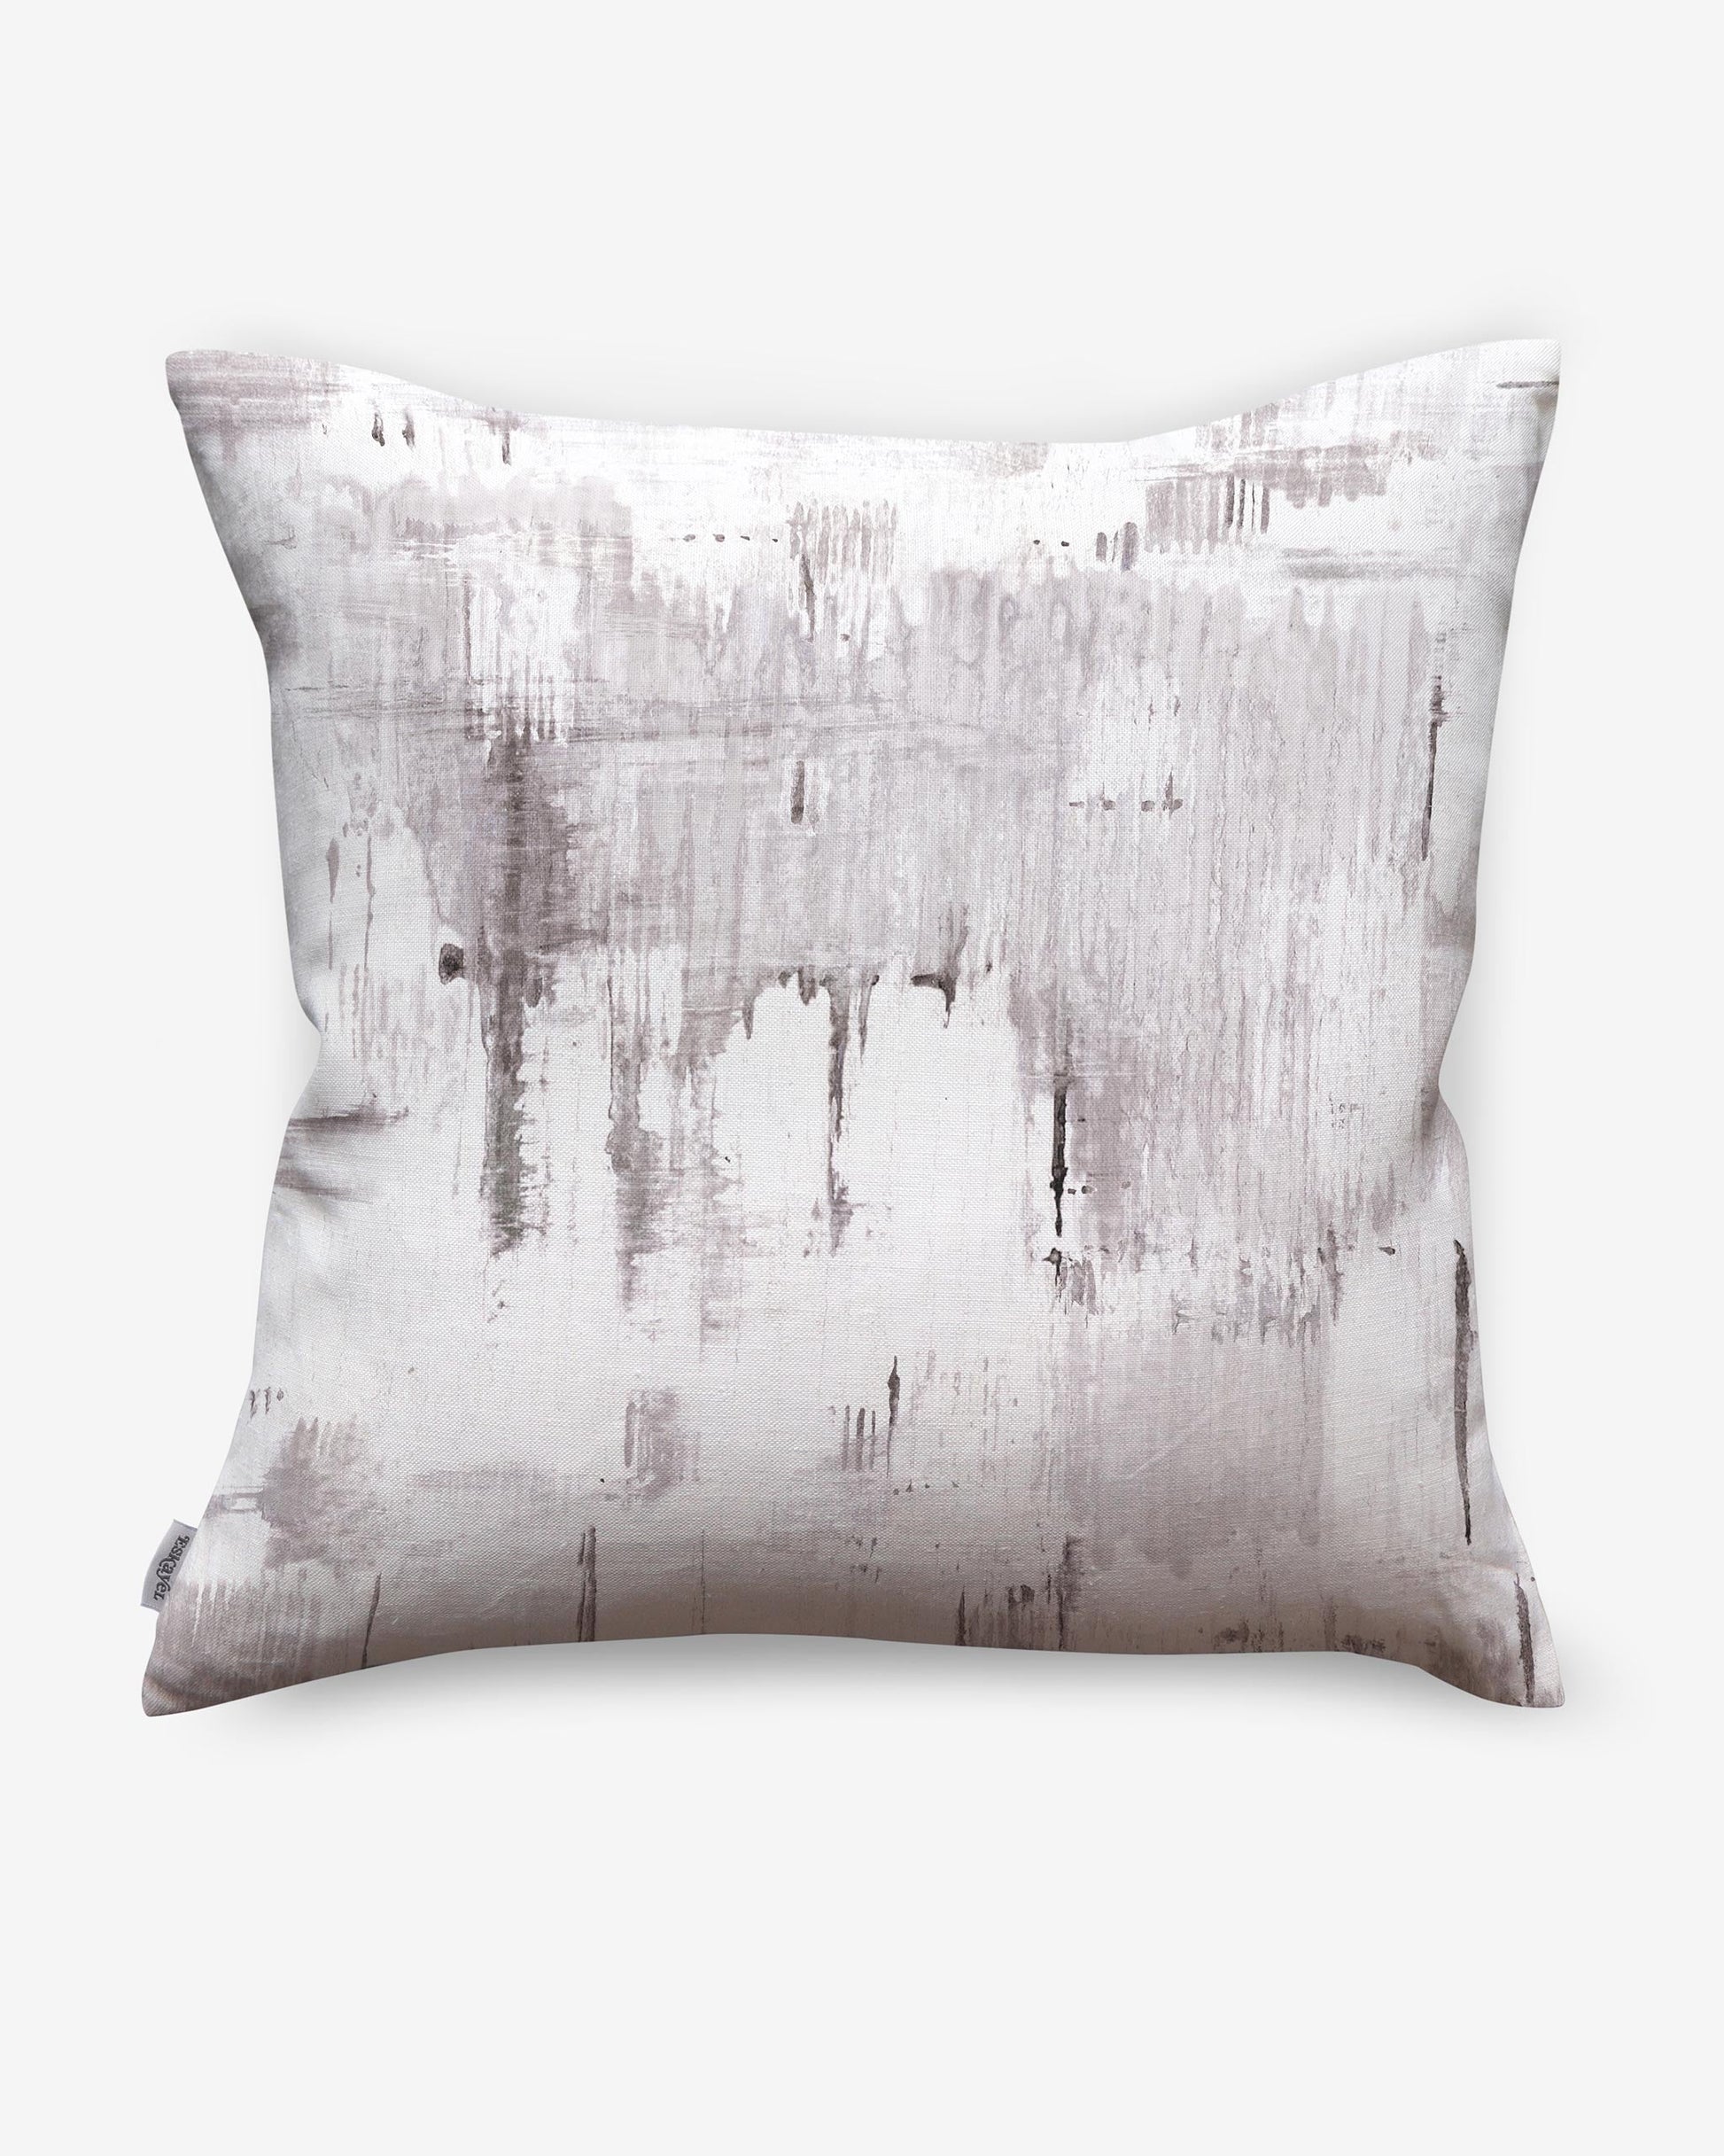 A luxury Cherifia Pillow with a Cherifia pattern on it